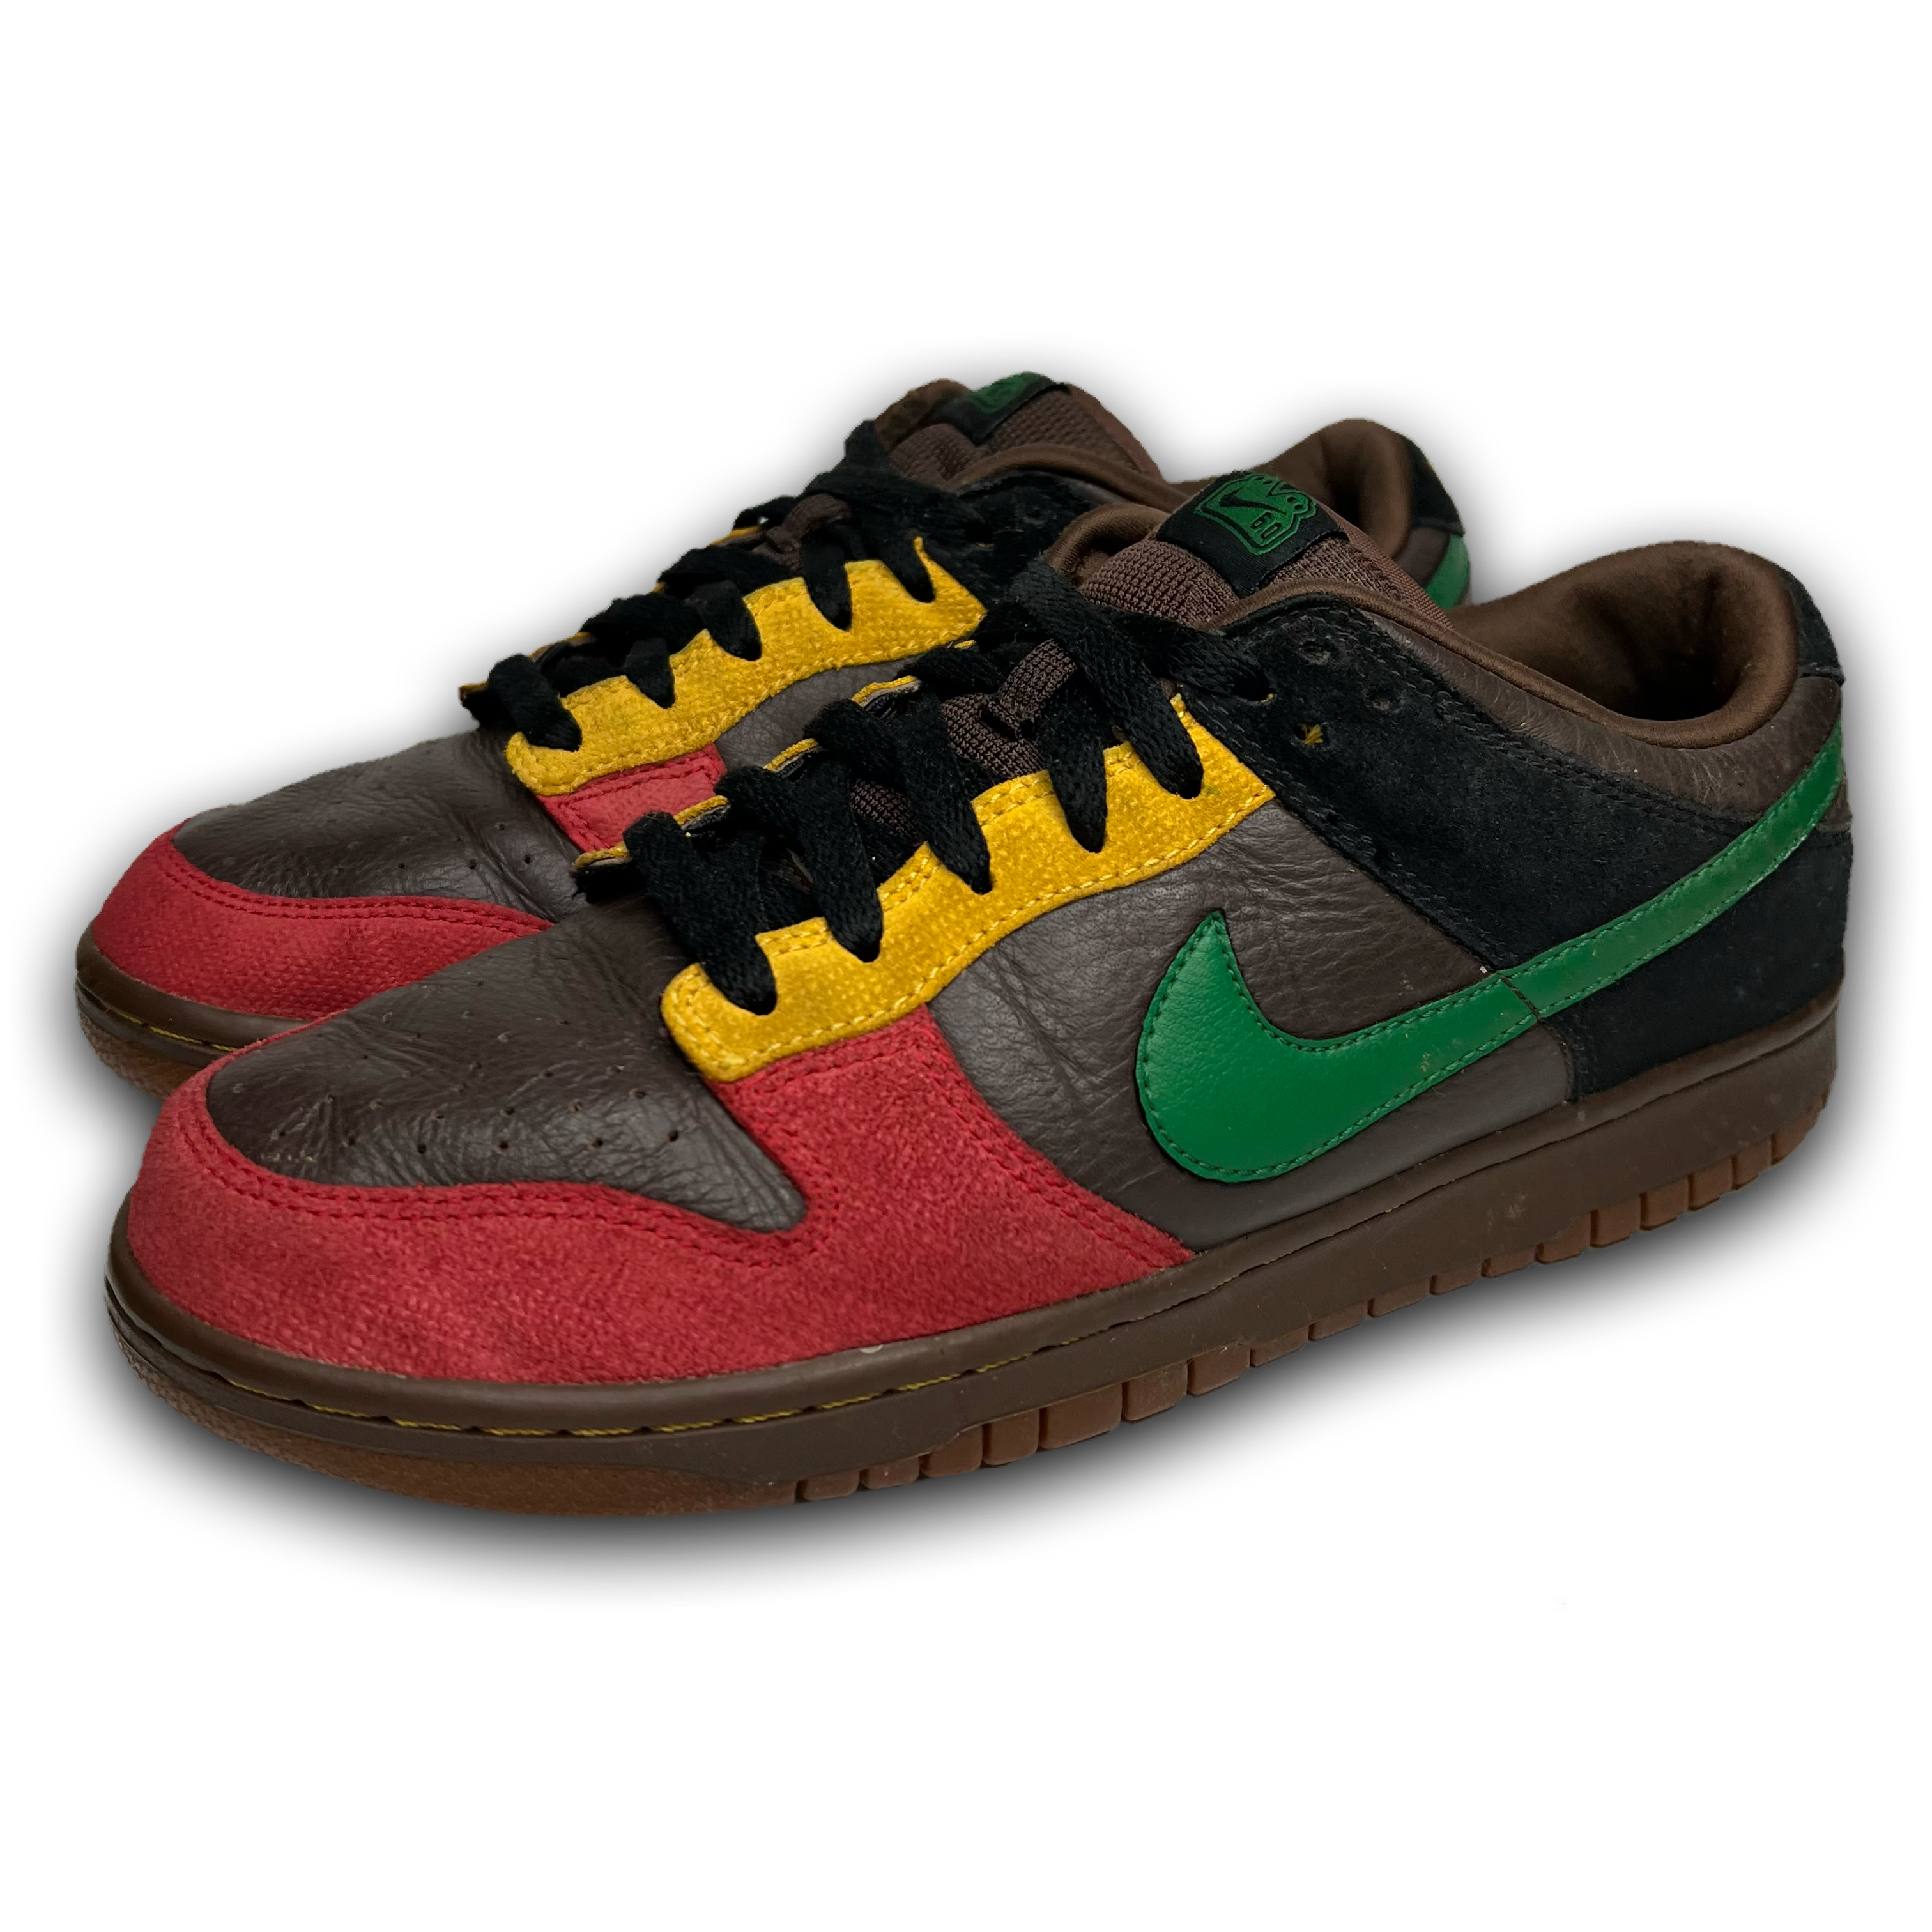 Nike Dunk Low 6.0 “Rasta” (Size 9)